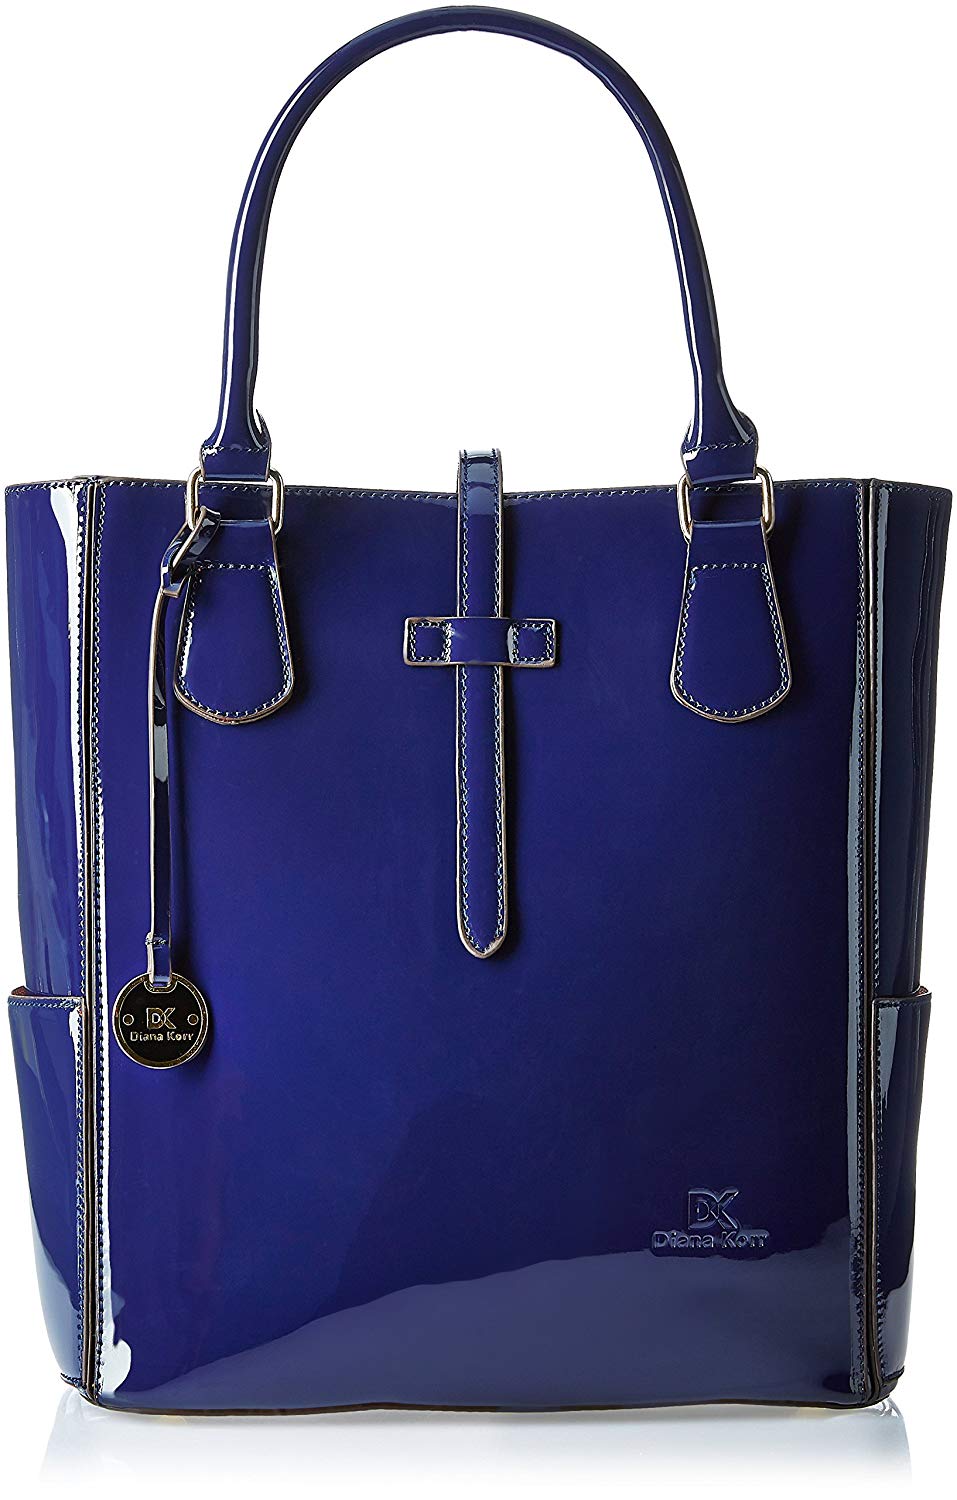 bright colored handbags for women